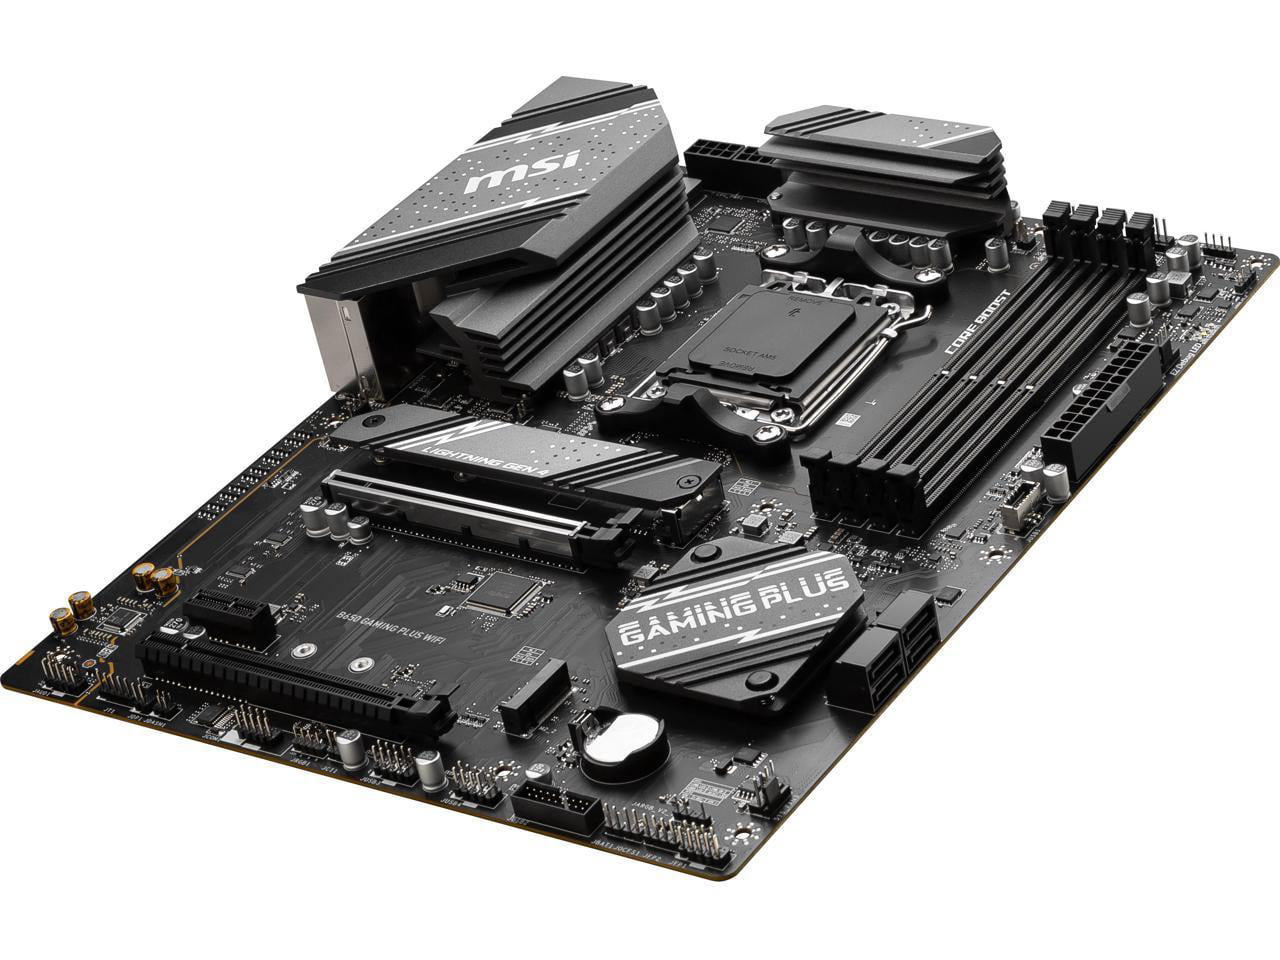 MSI B650M-P Gaming Desktop Motherboard - AMD B650 Chipset